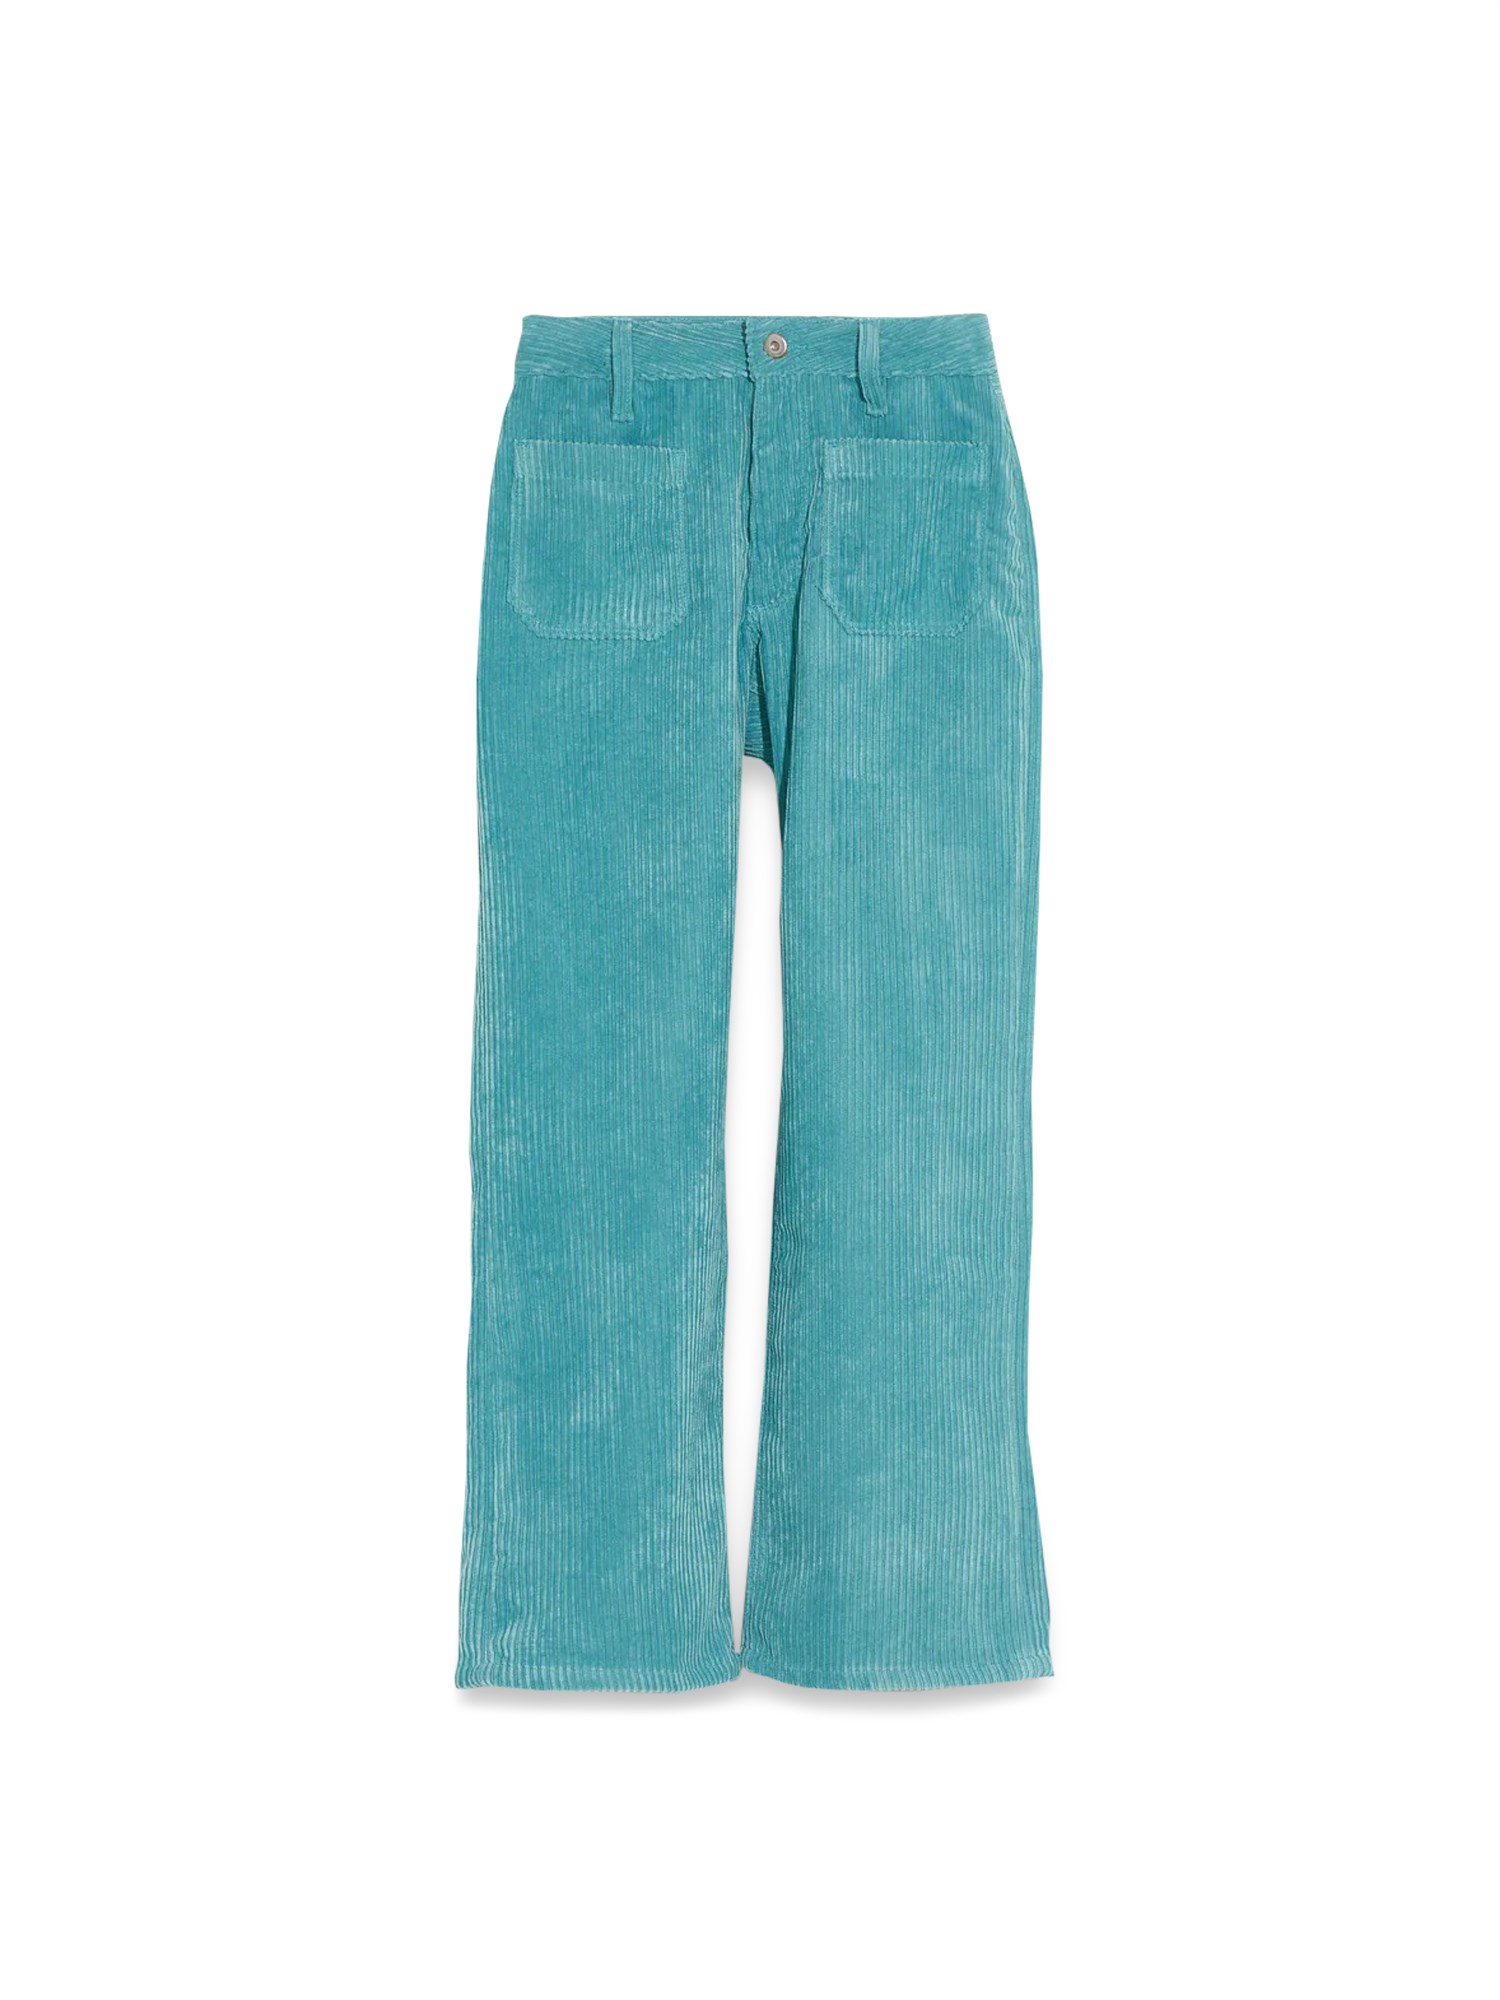 bellerose light blue pants